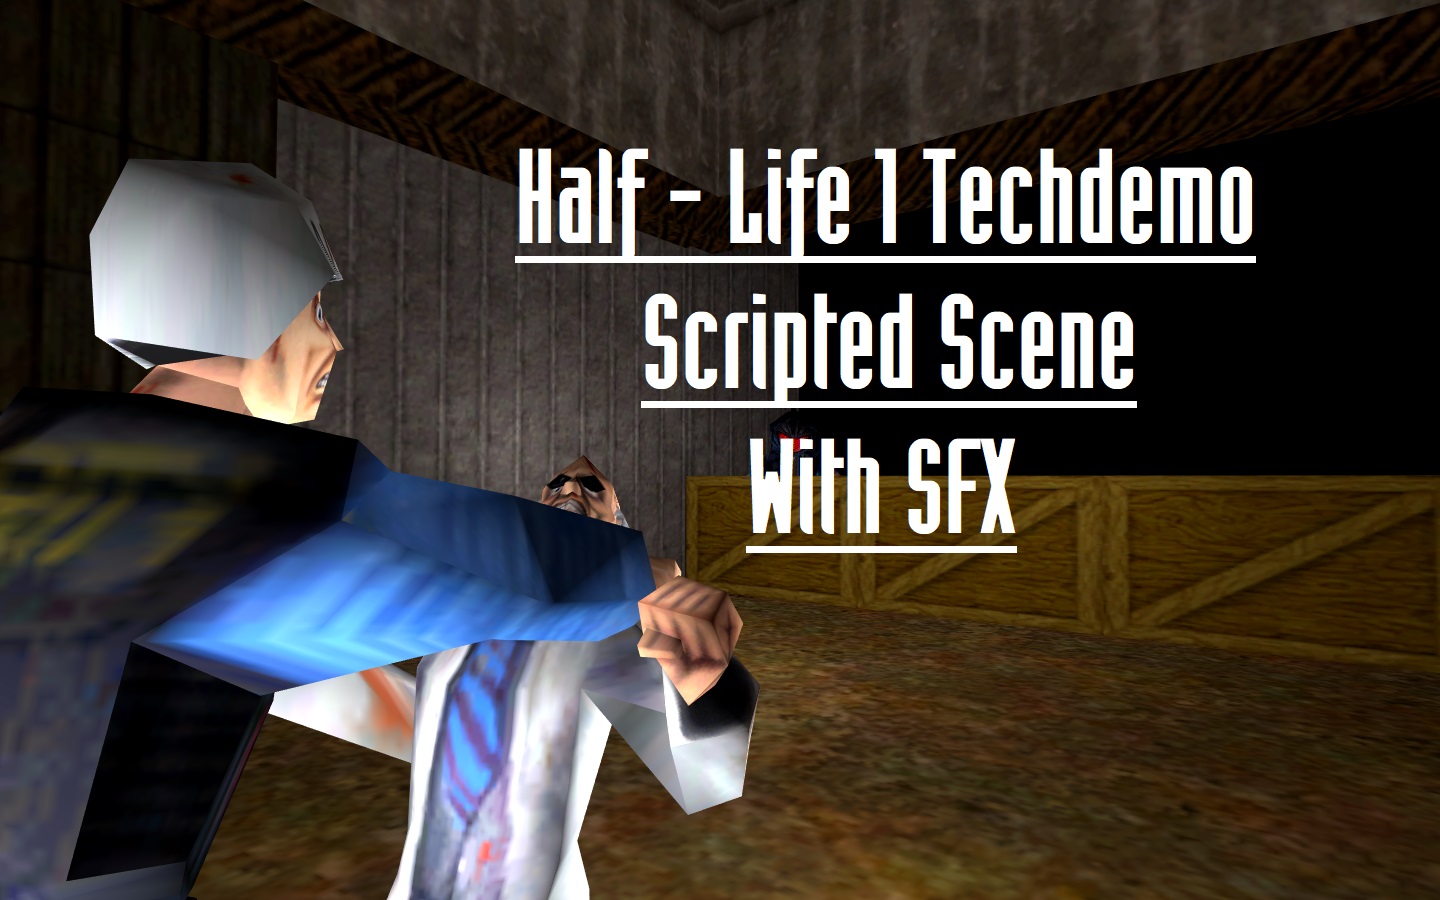 Half-Life Techdemo Scripted Scene with SFX